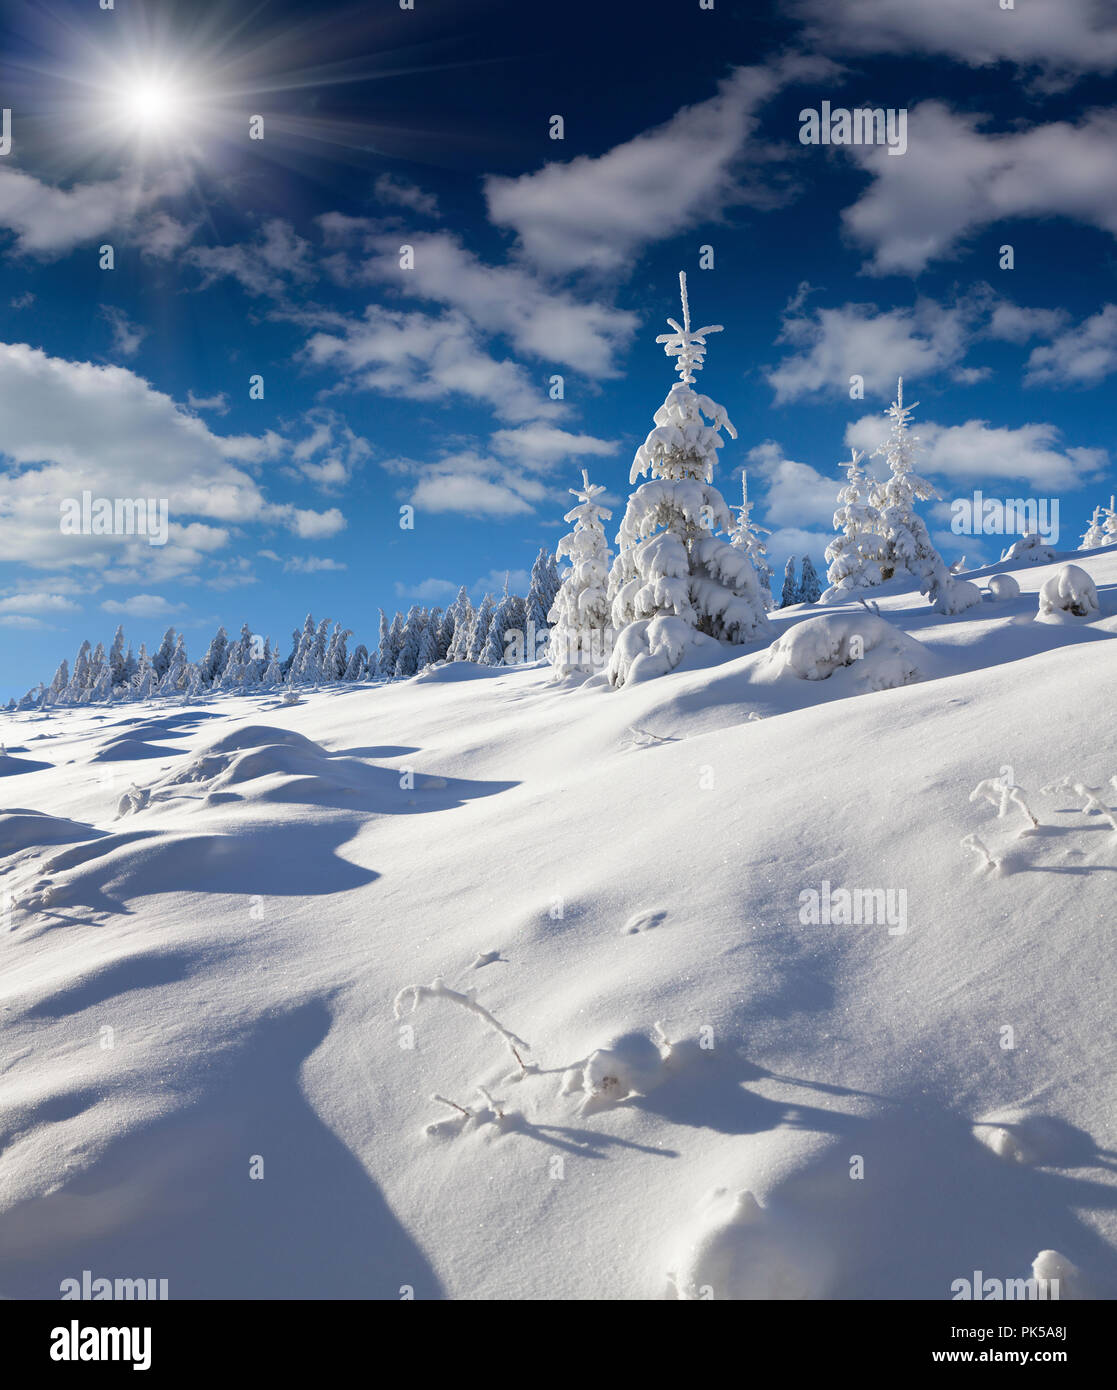 Sunny morning scene in the winter mountain. Stock Photo